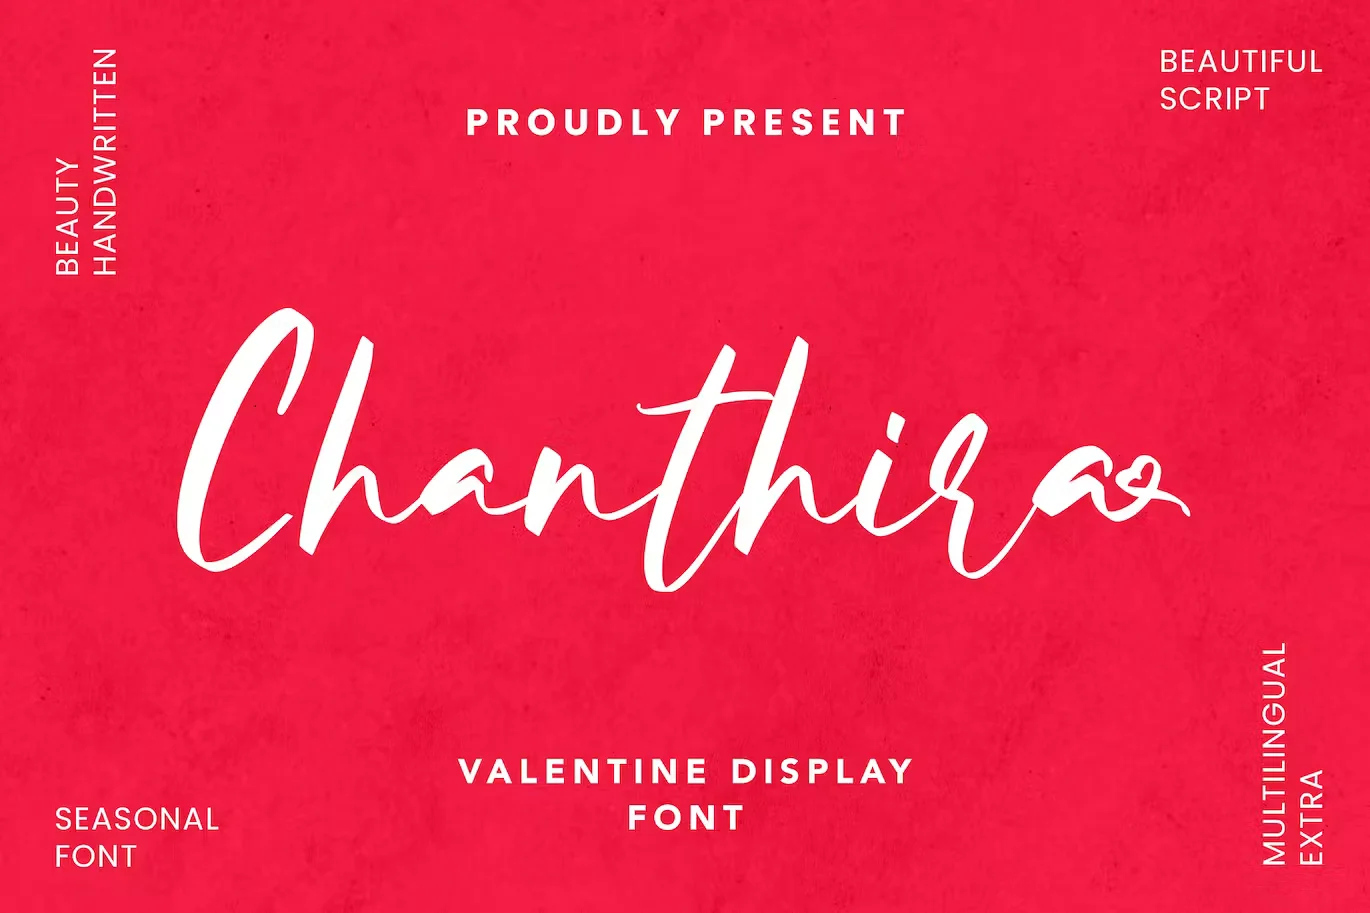 Chanthira - Valentine Display Font